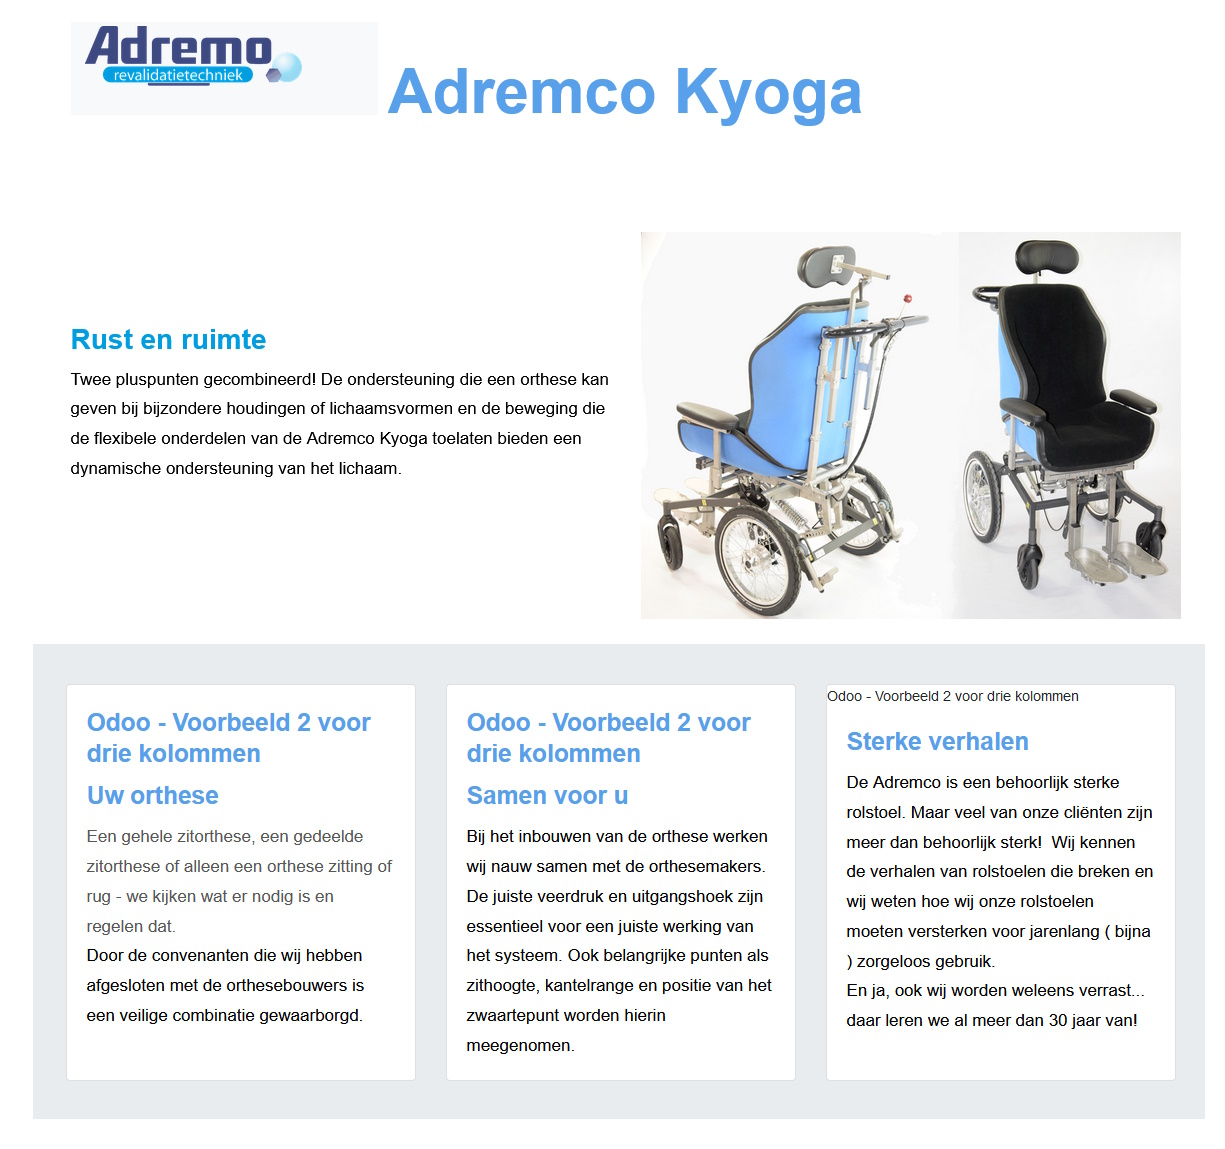 toegevoegd document 2 van Adremco Kyoga  